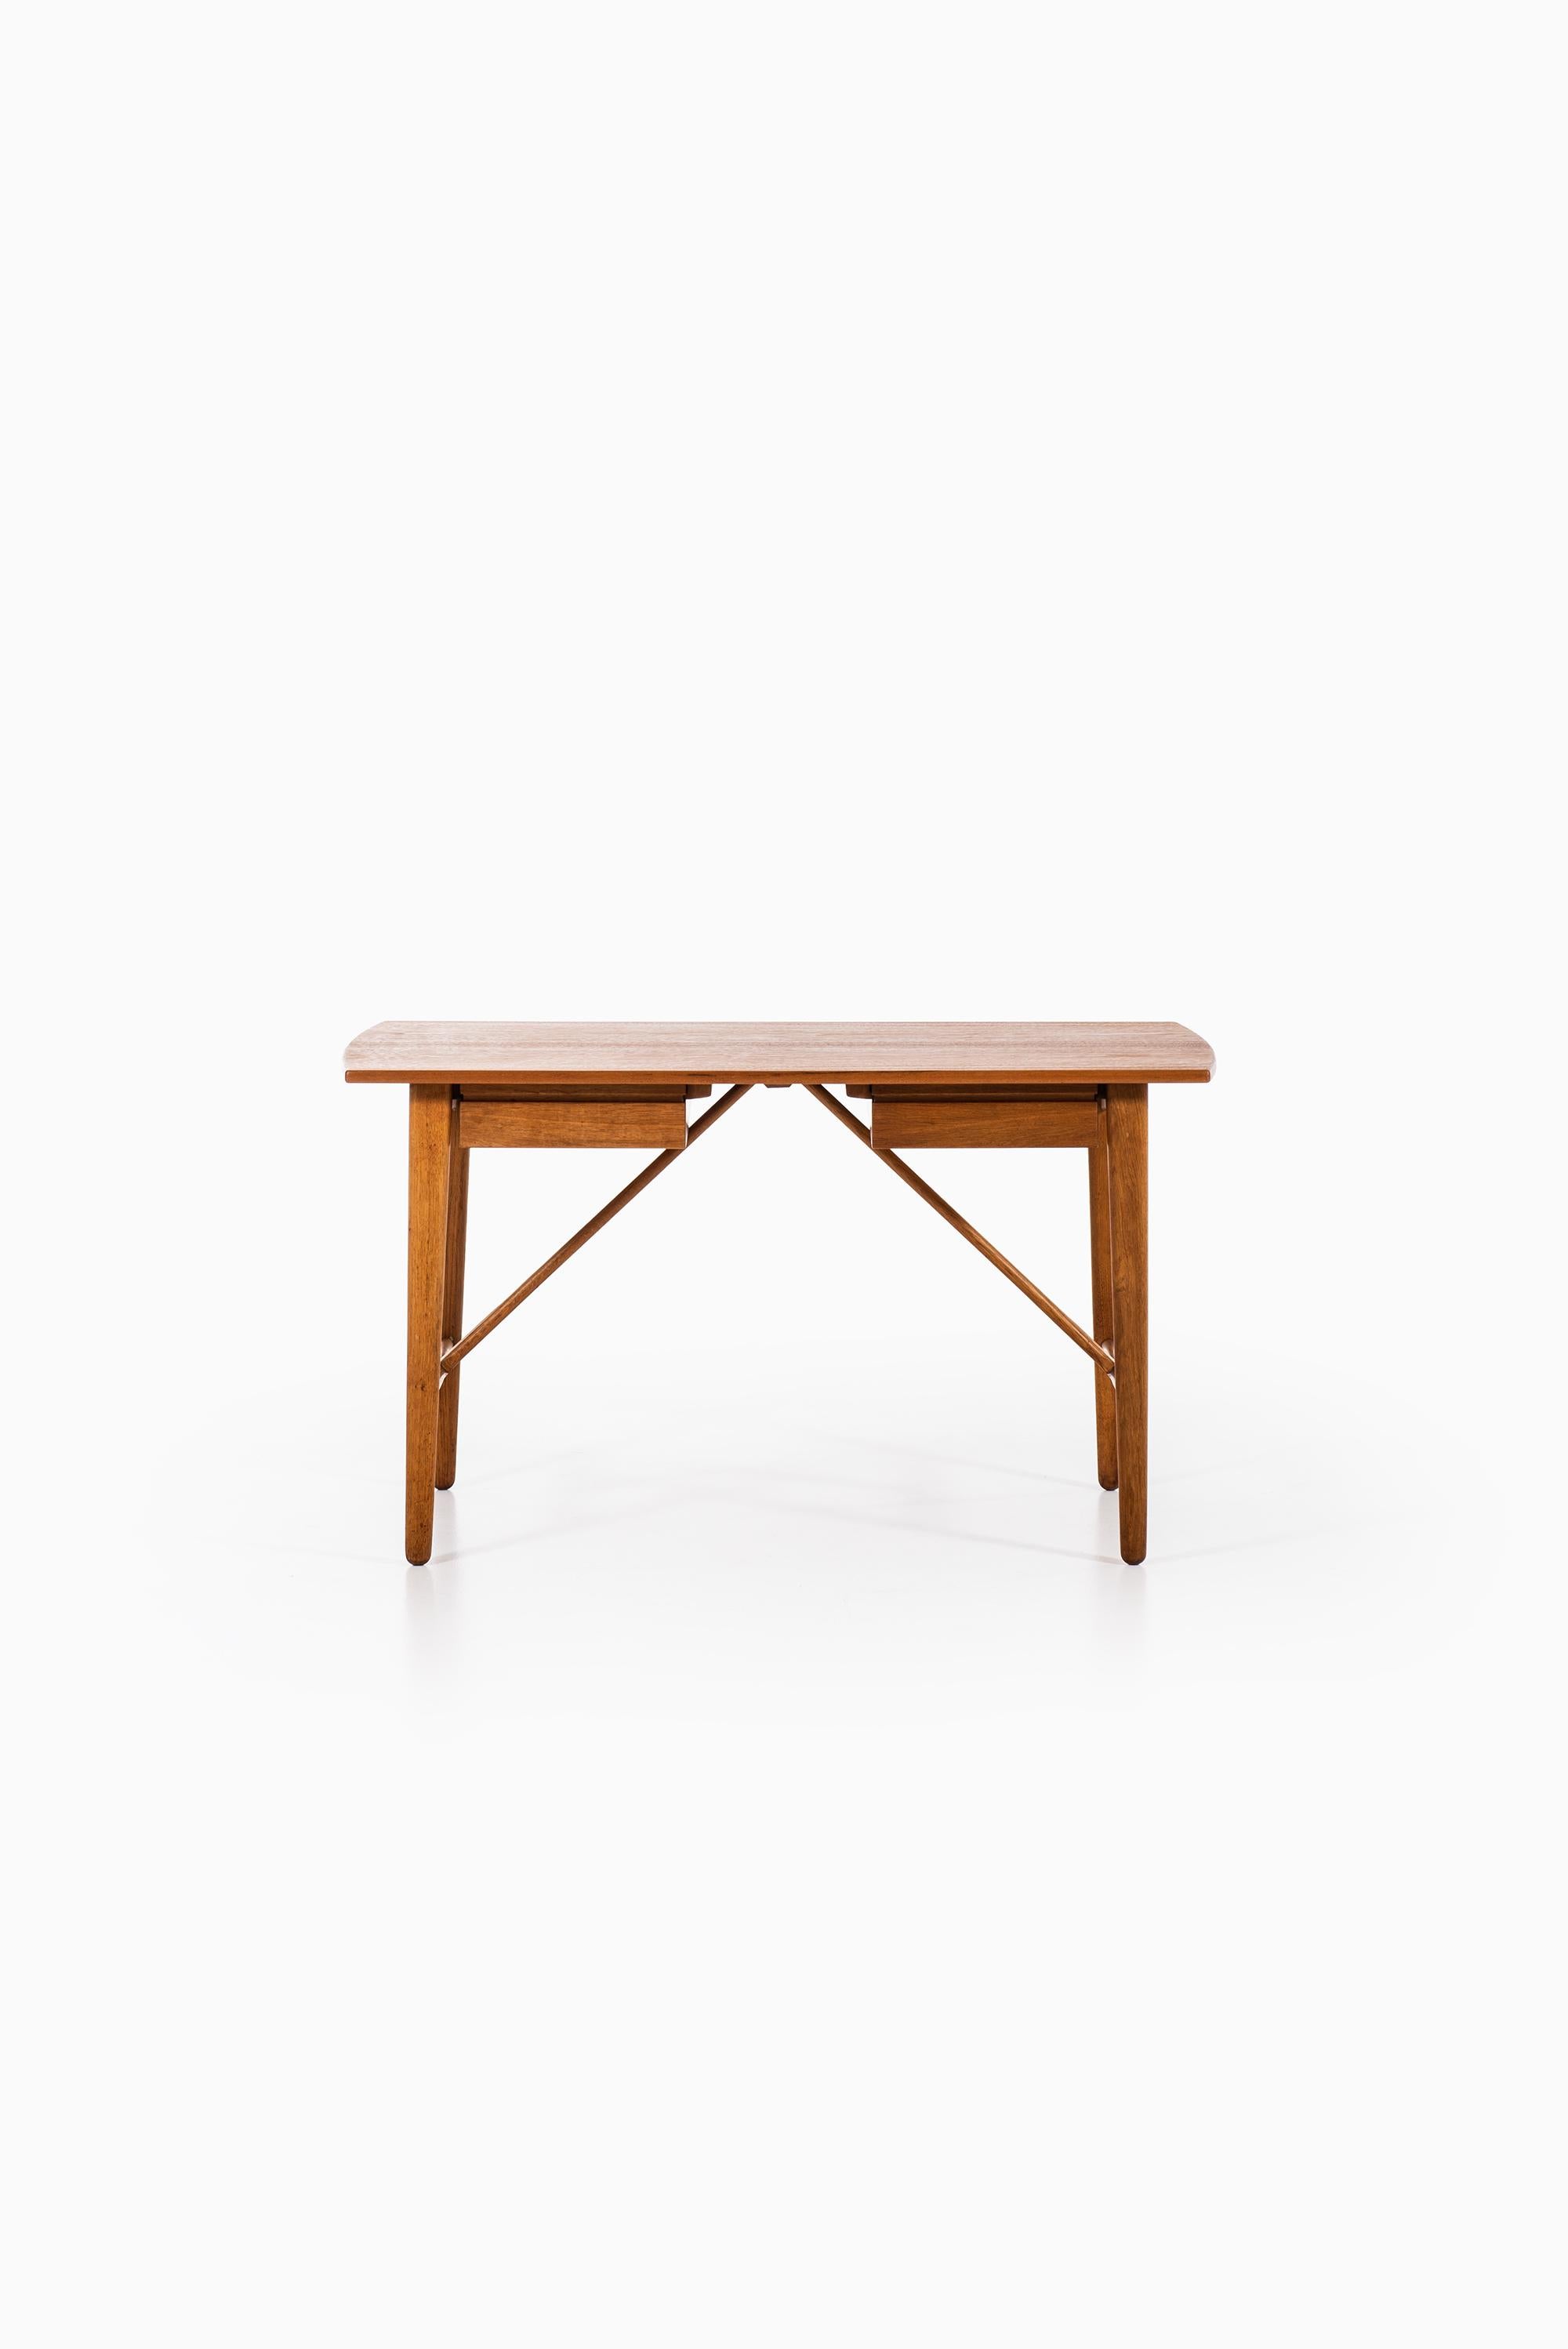 Rare desk designed by Svend Aage Madsen. Produced by K. Knudsen & Søn in Denmark.